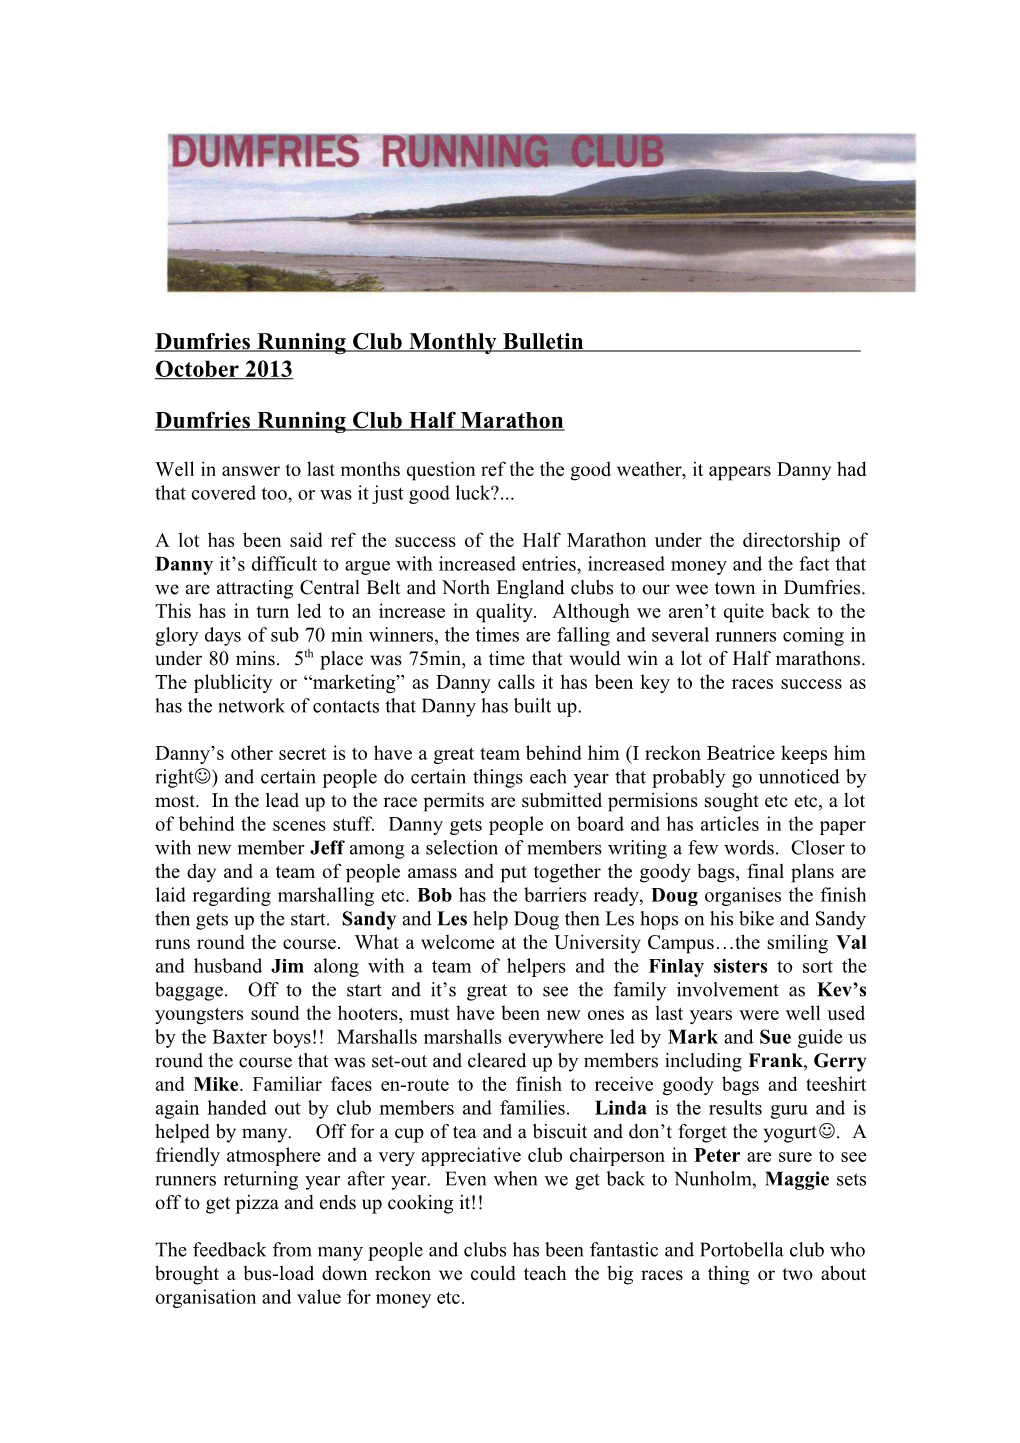 Dumfries Running Club Monthly Bulletin October 2013